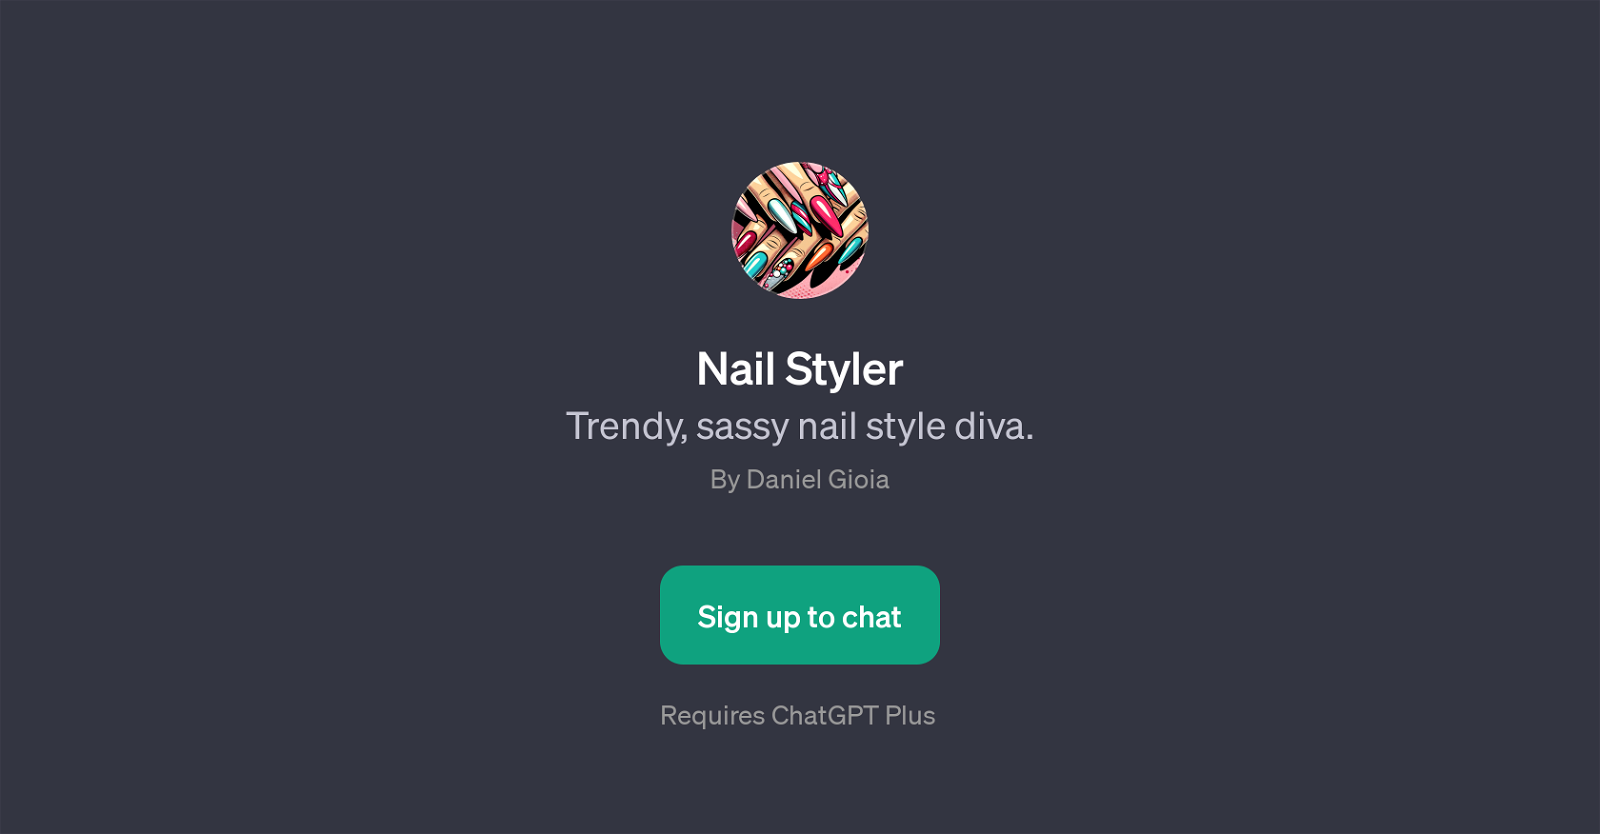 Nail Styler website